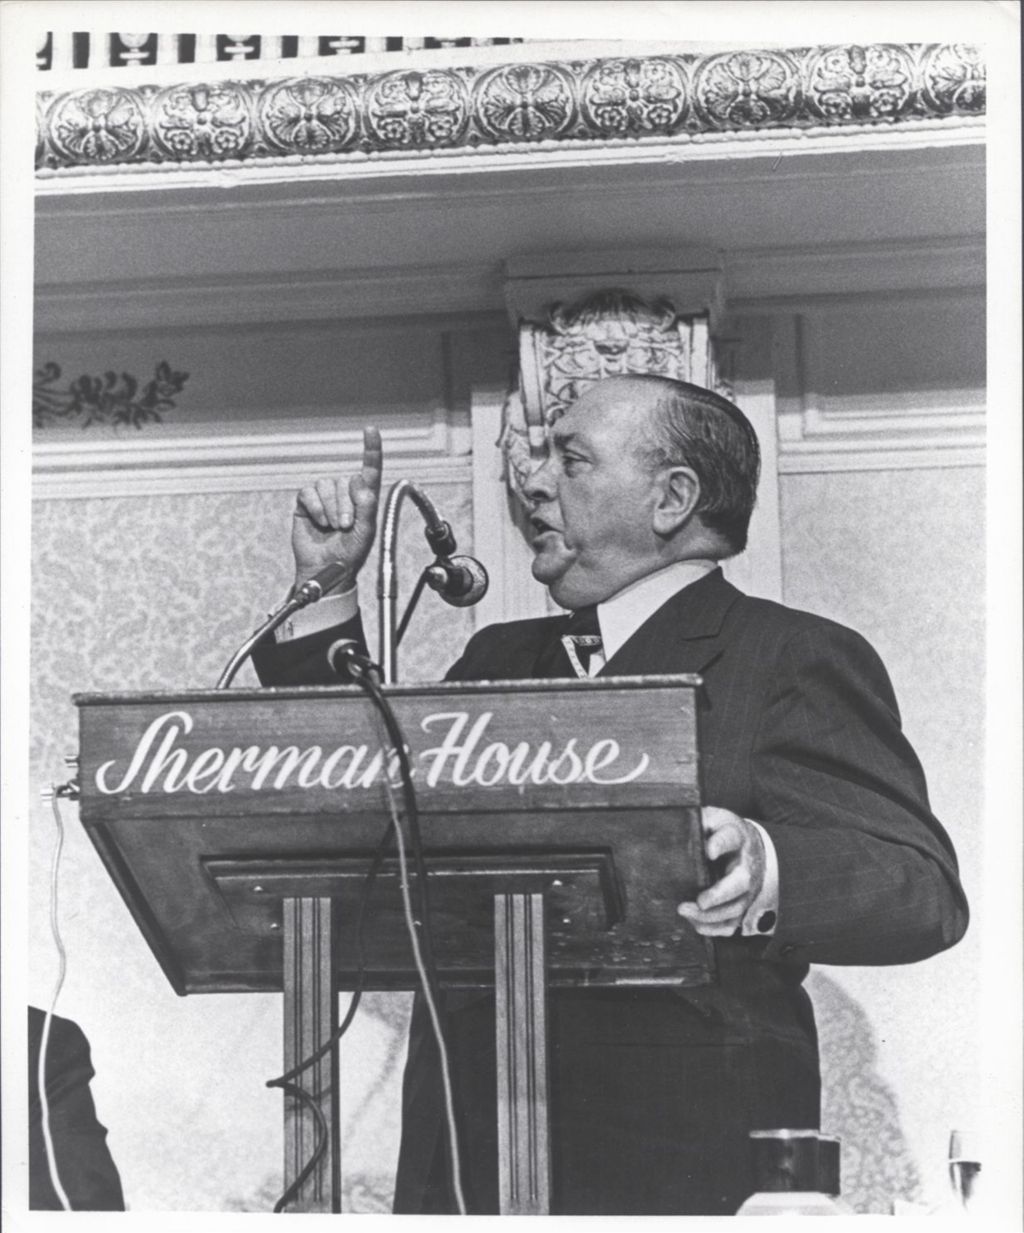 Richard J. Daley speaking at the Sherman House Hotel